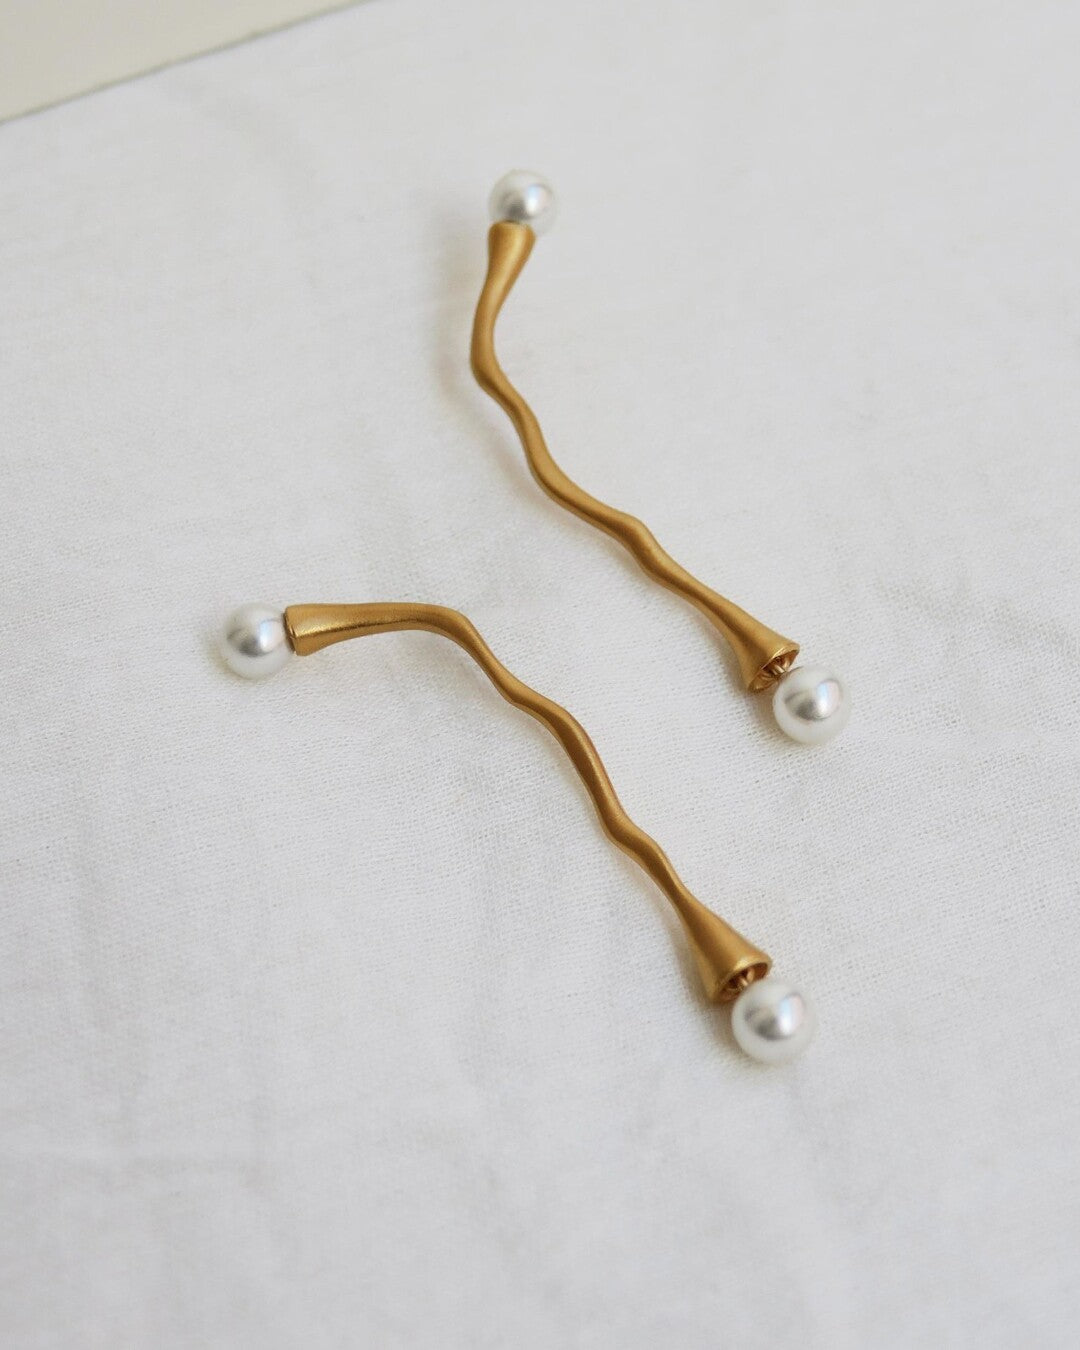 Handmade golden earrings with murano glass pearl - Joidart